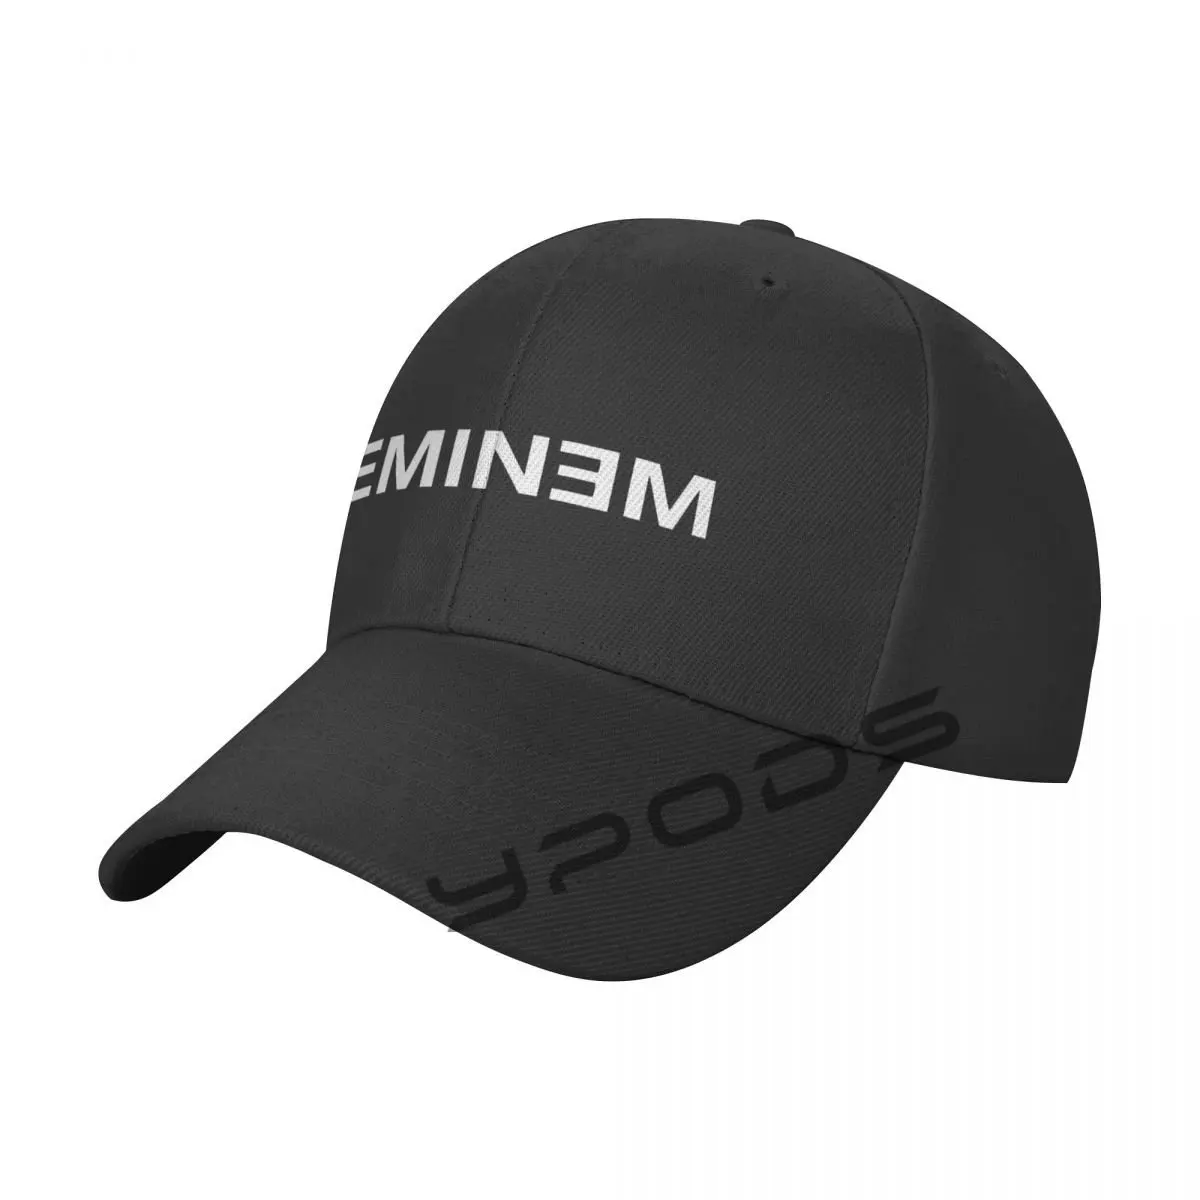 Eminem Casual Baseball Cap for Women and Men Fashion Hat Hard Top Caps Snapback Hat Unisex